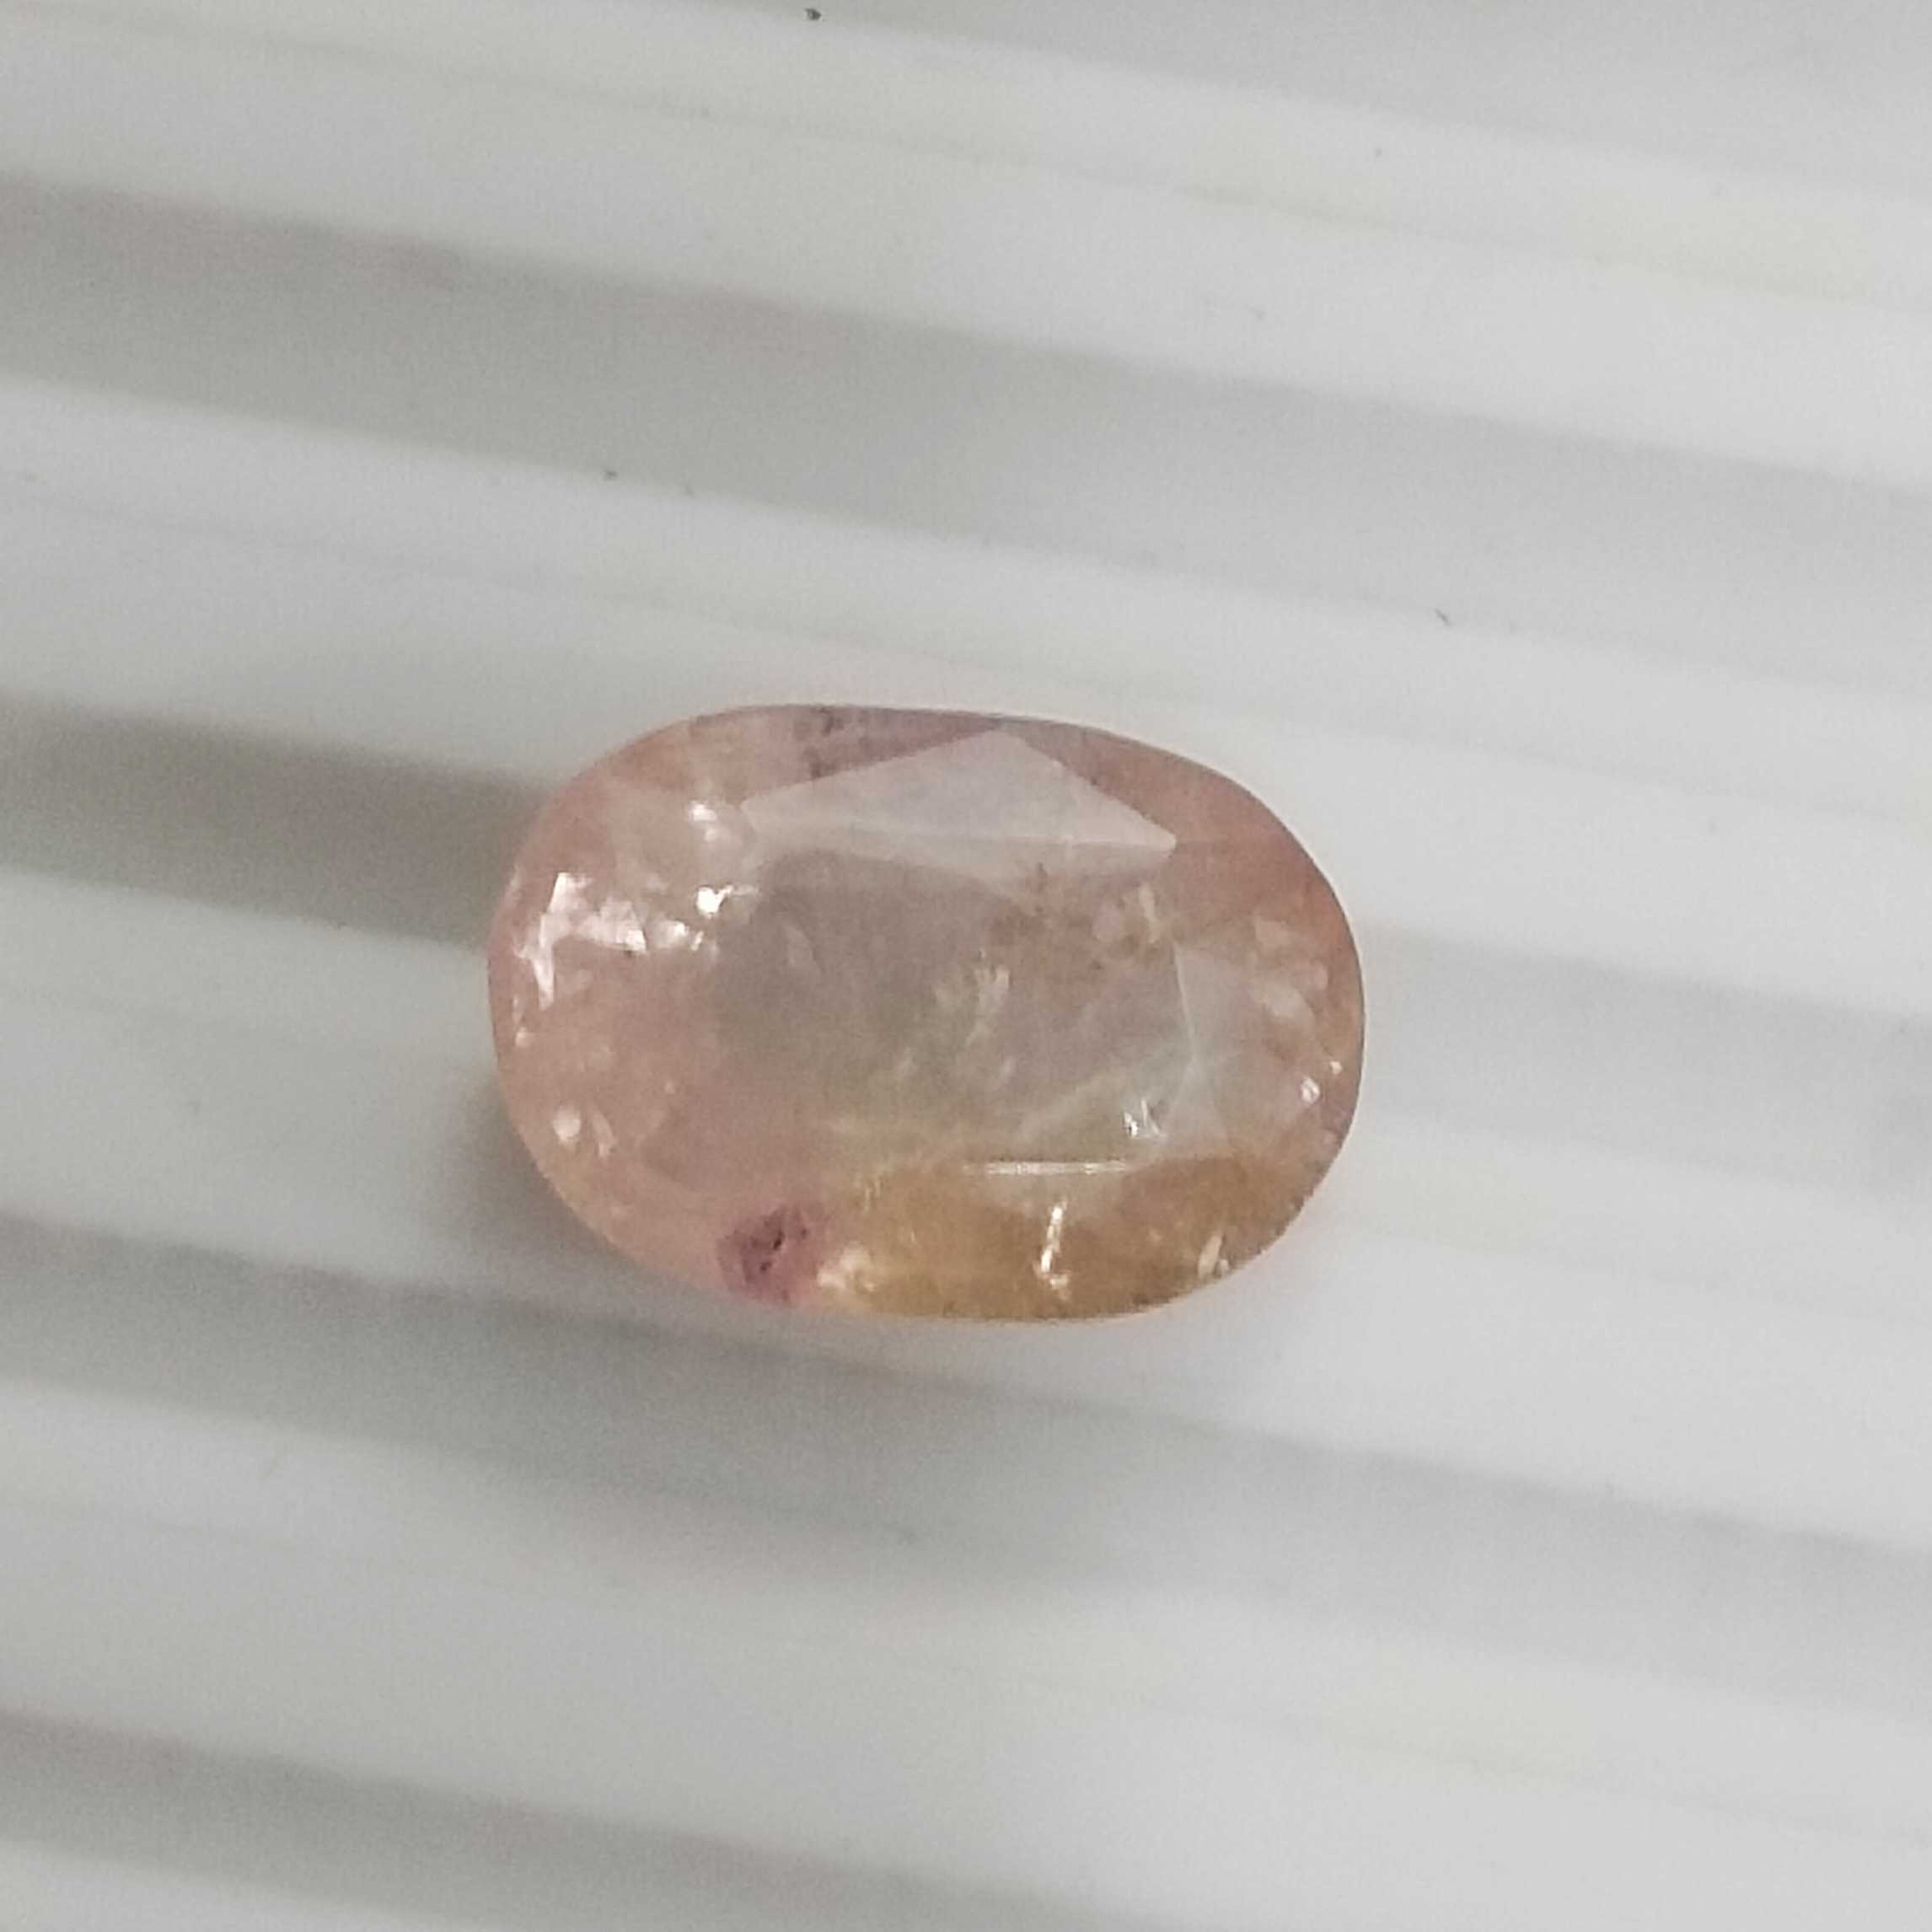 5.83ct IGI certified padparadscha sapphire oval cut unheated gemstone /